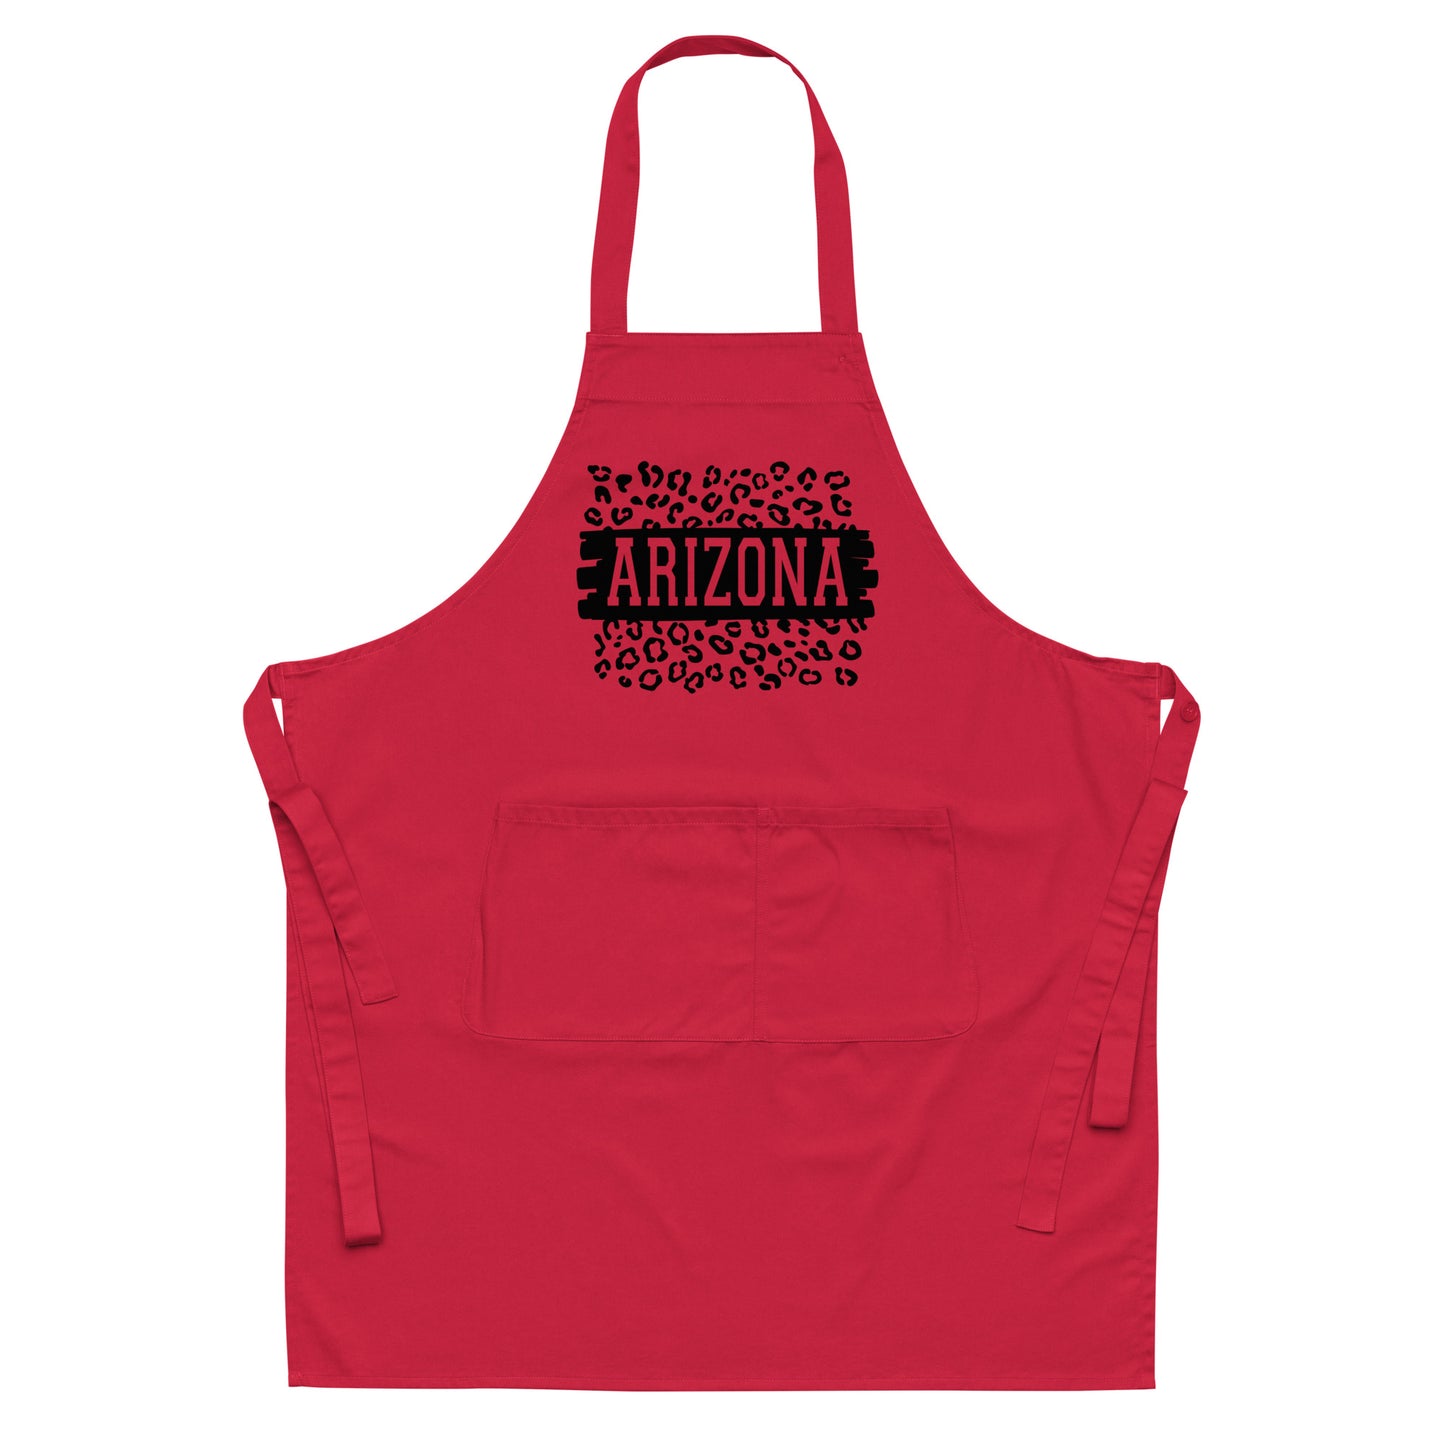 Arizona Organic cotton apron